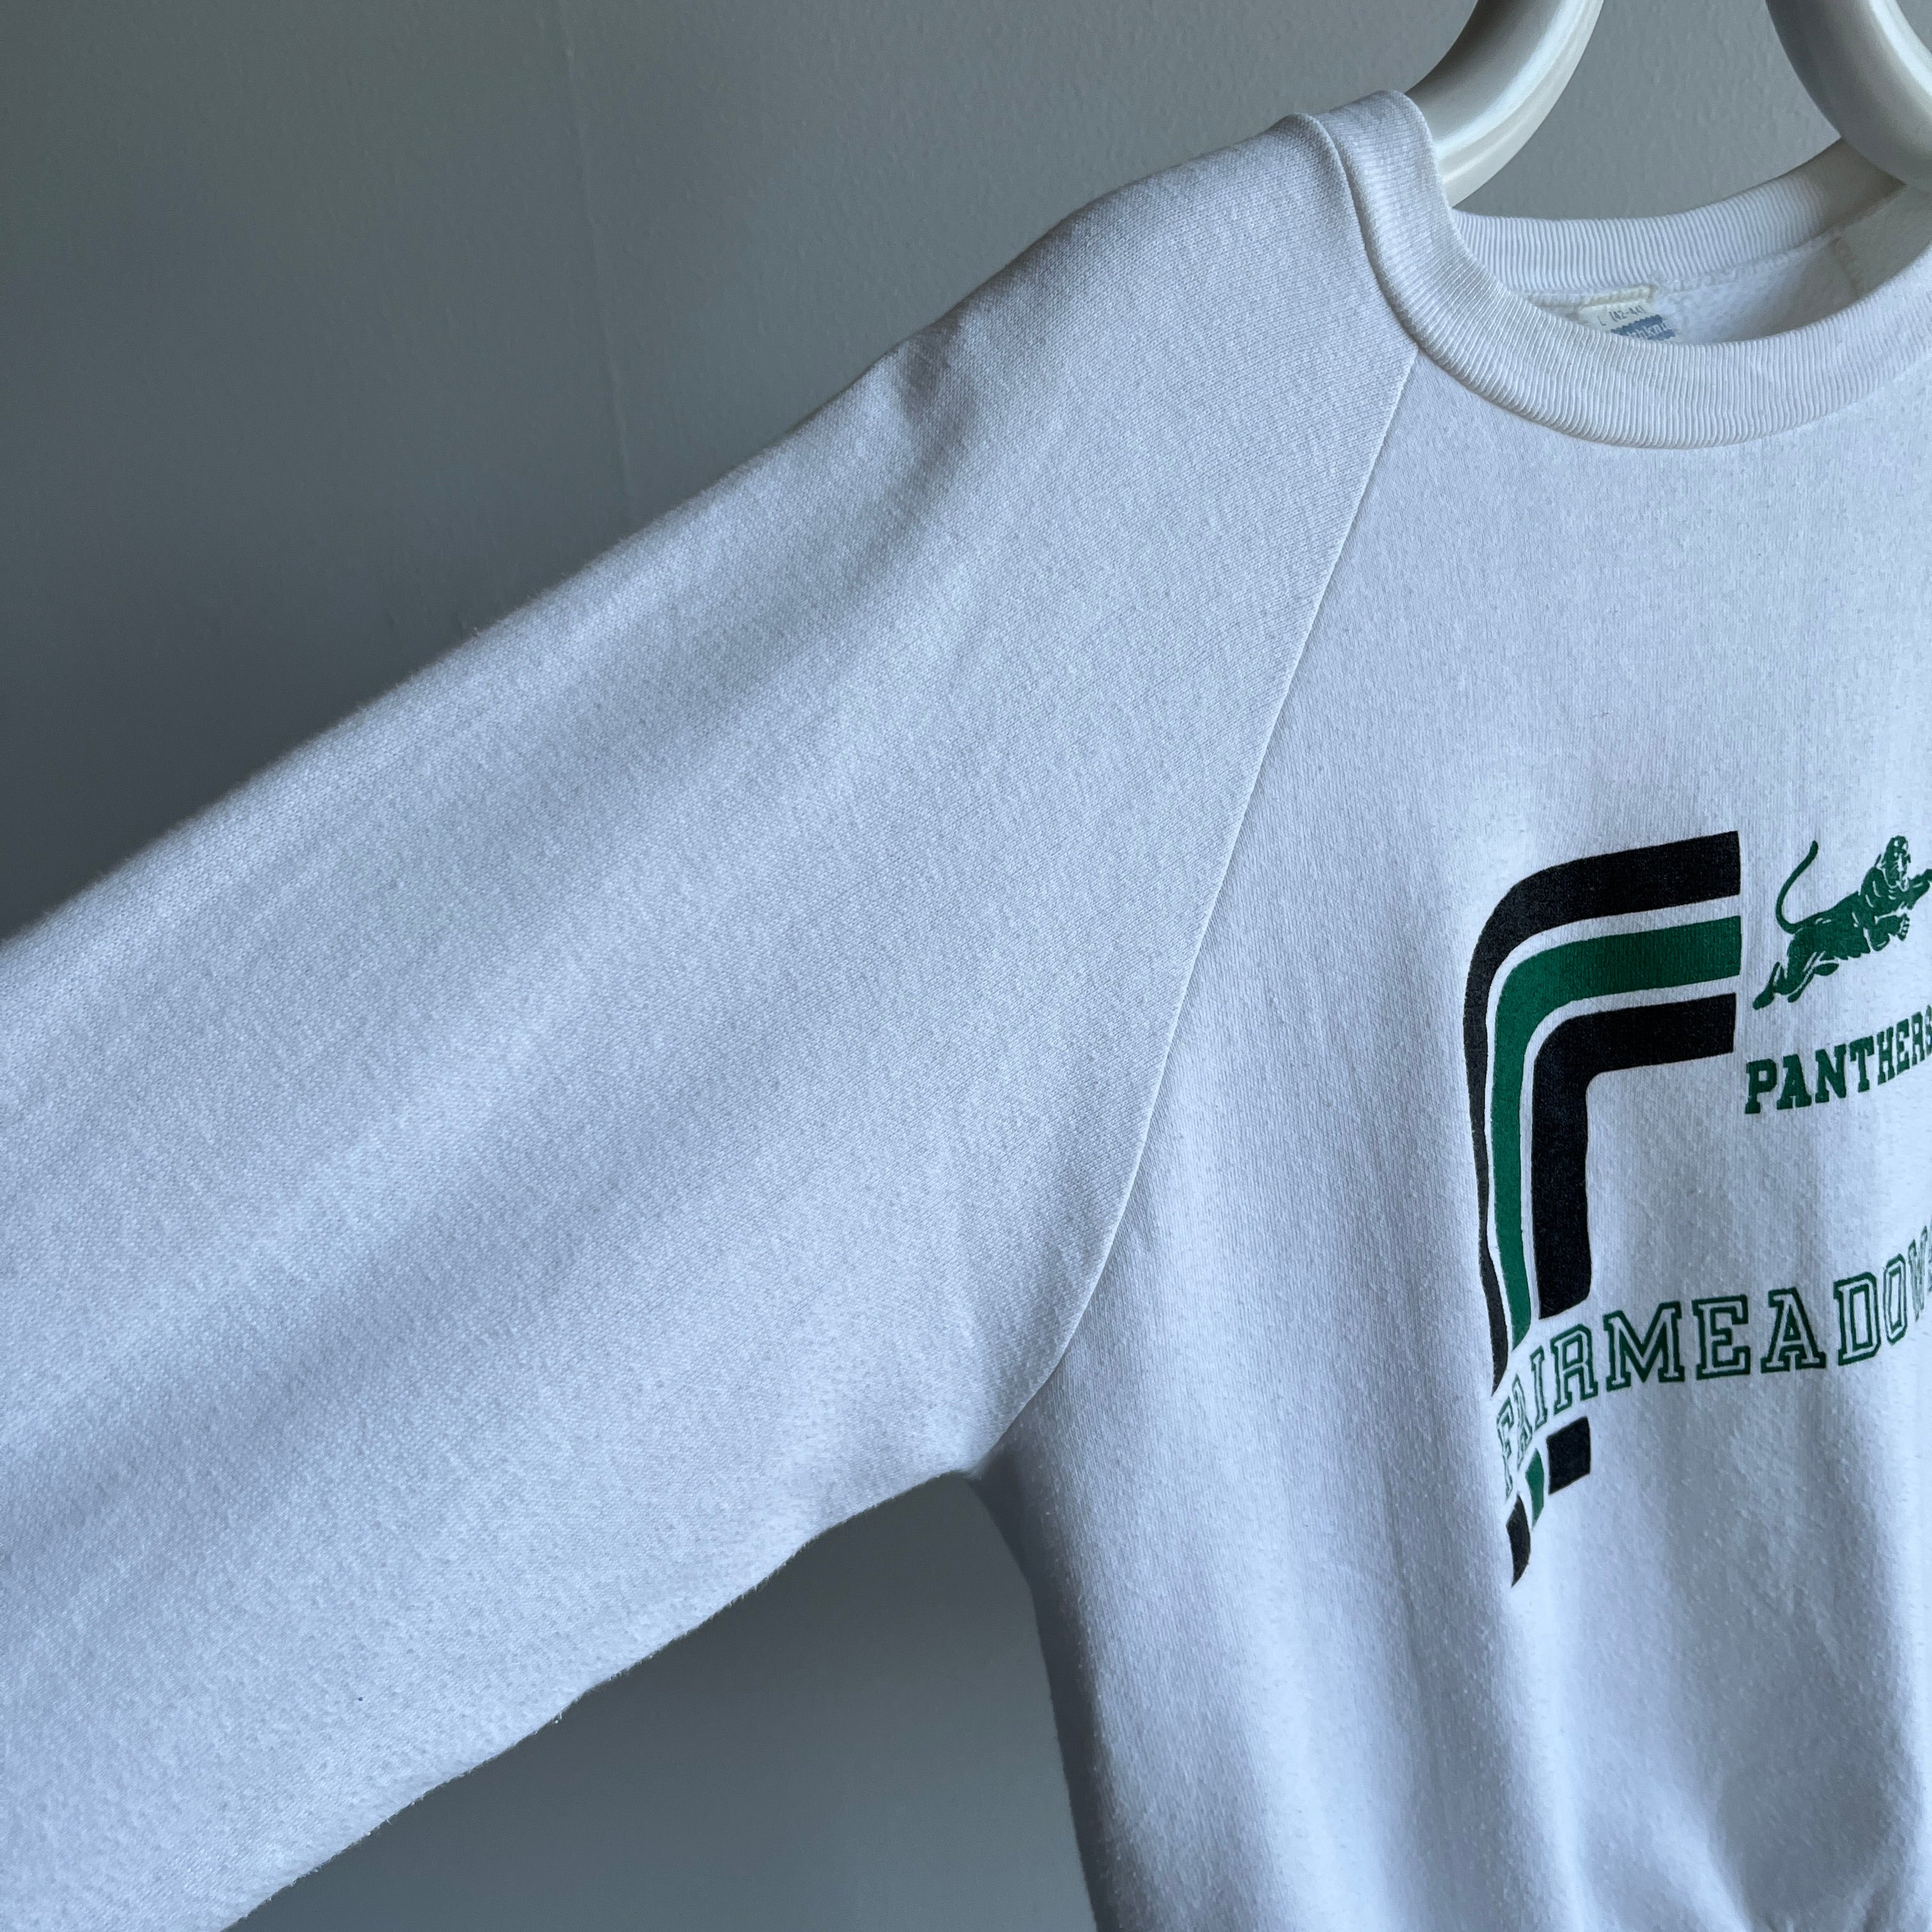 1970s Fairmeadows Panthers Sweatshirt